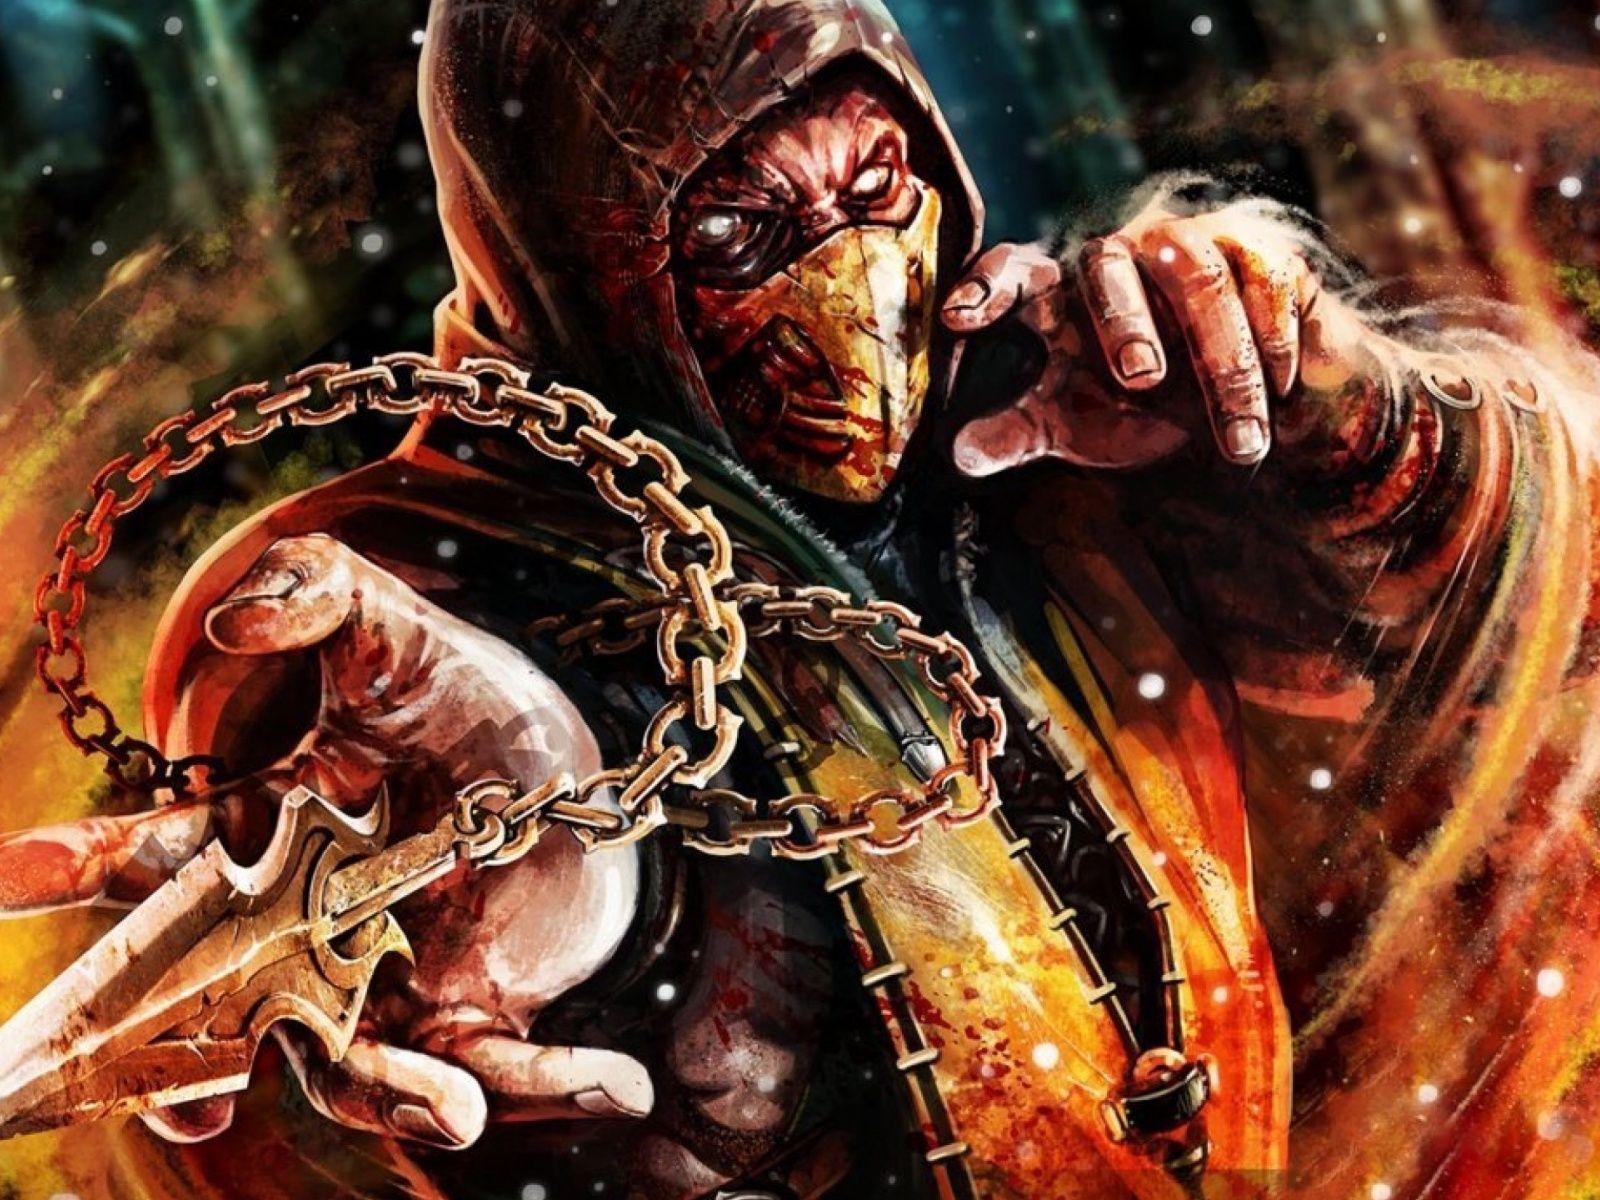 Ultimate Mortal Kombat 11 [4K] Desktop Wallpaper by KortezDrake on